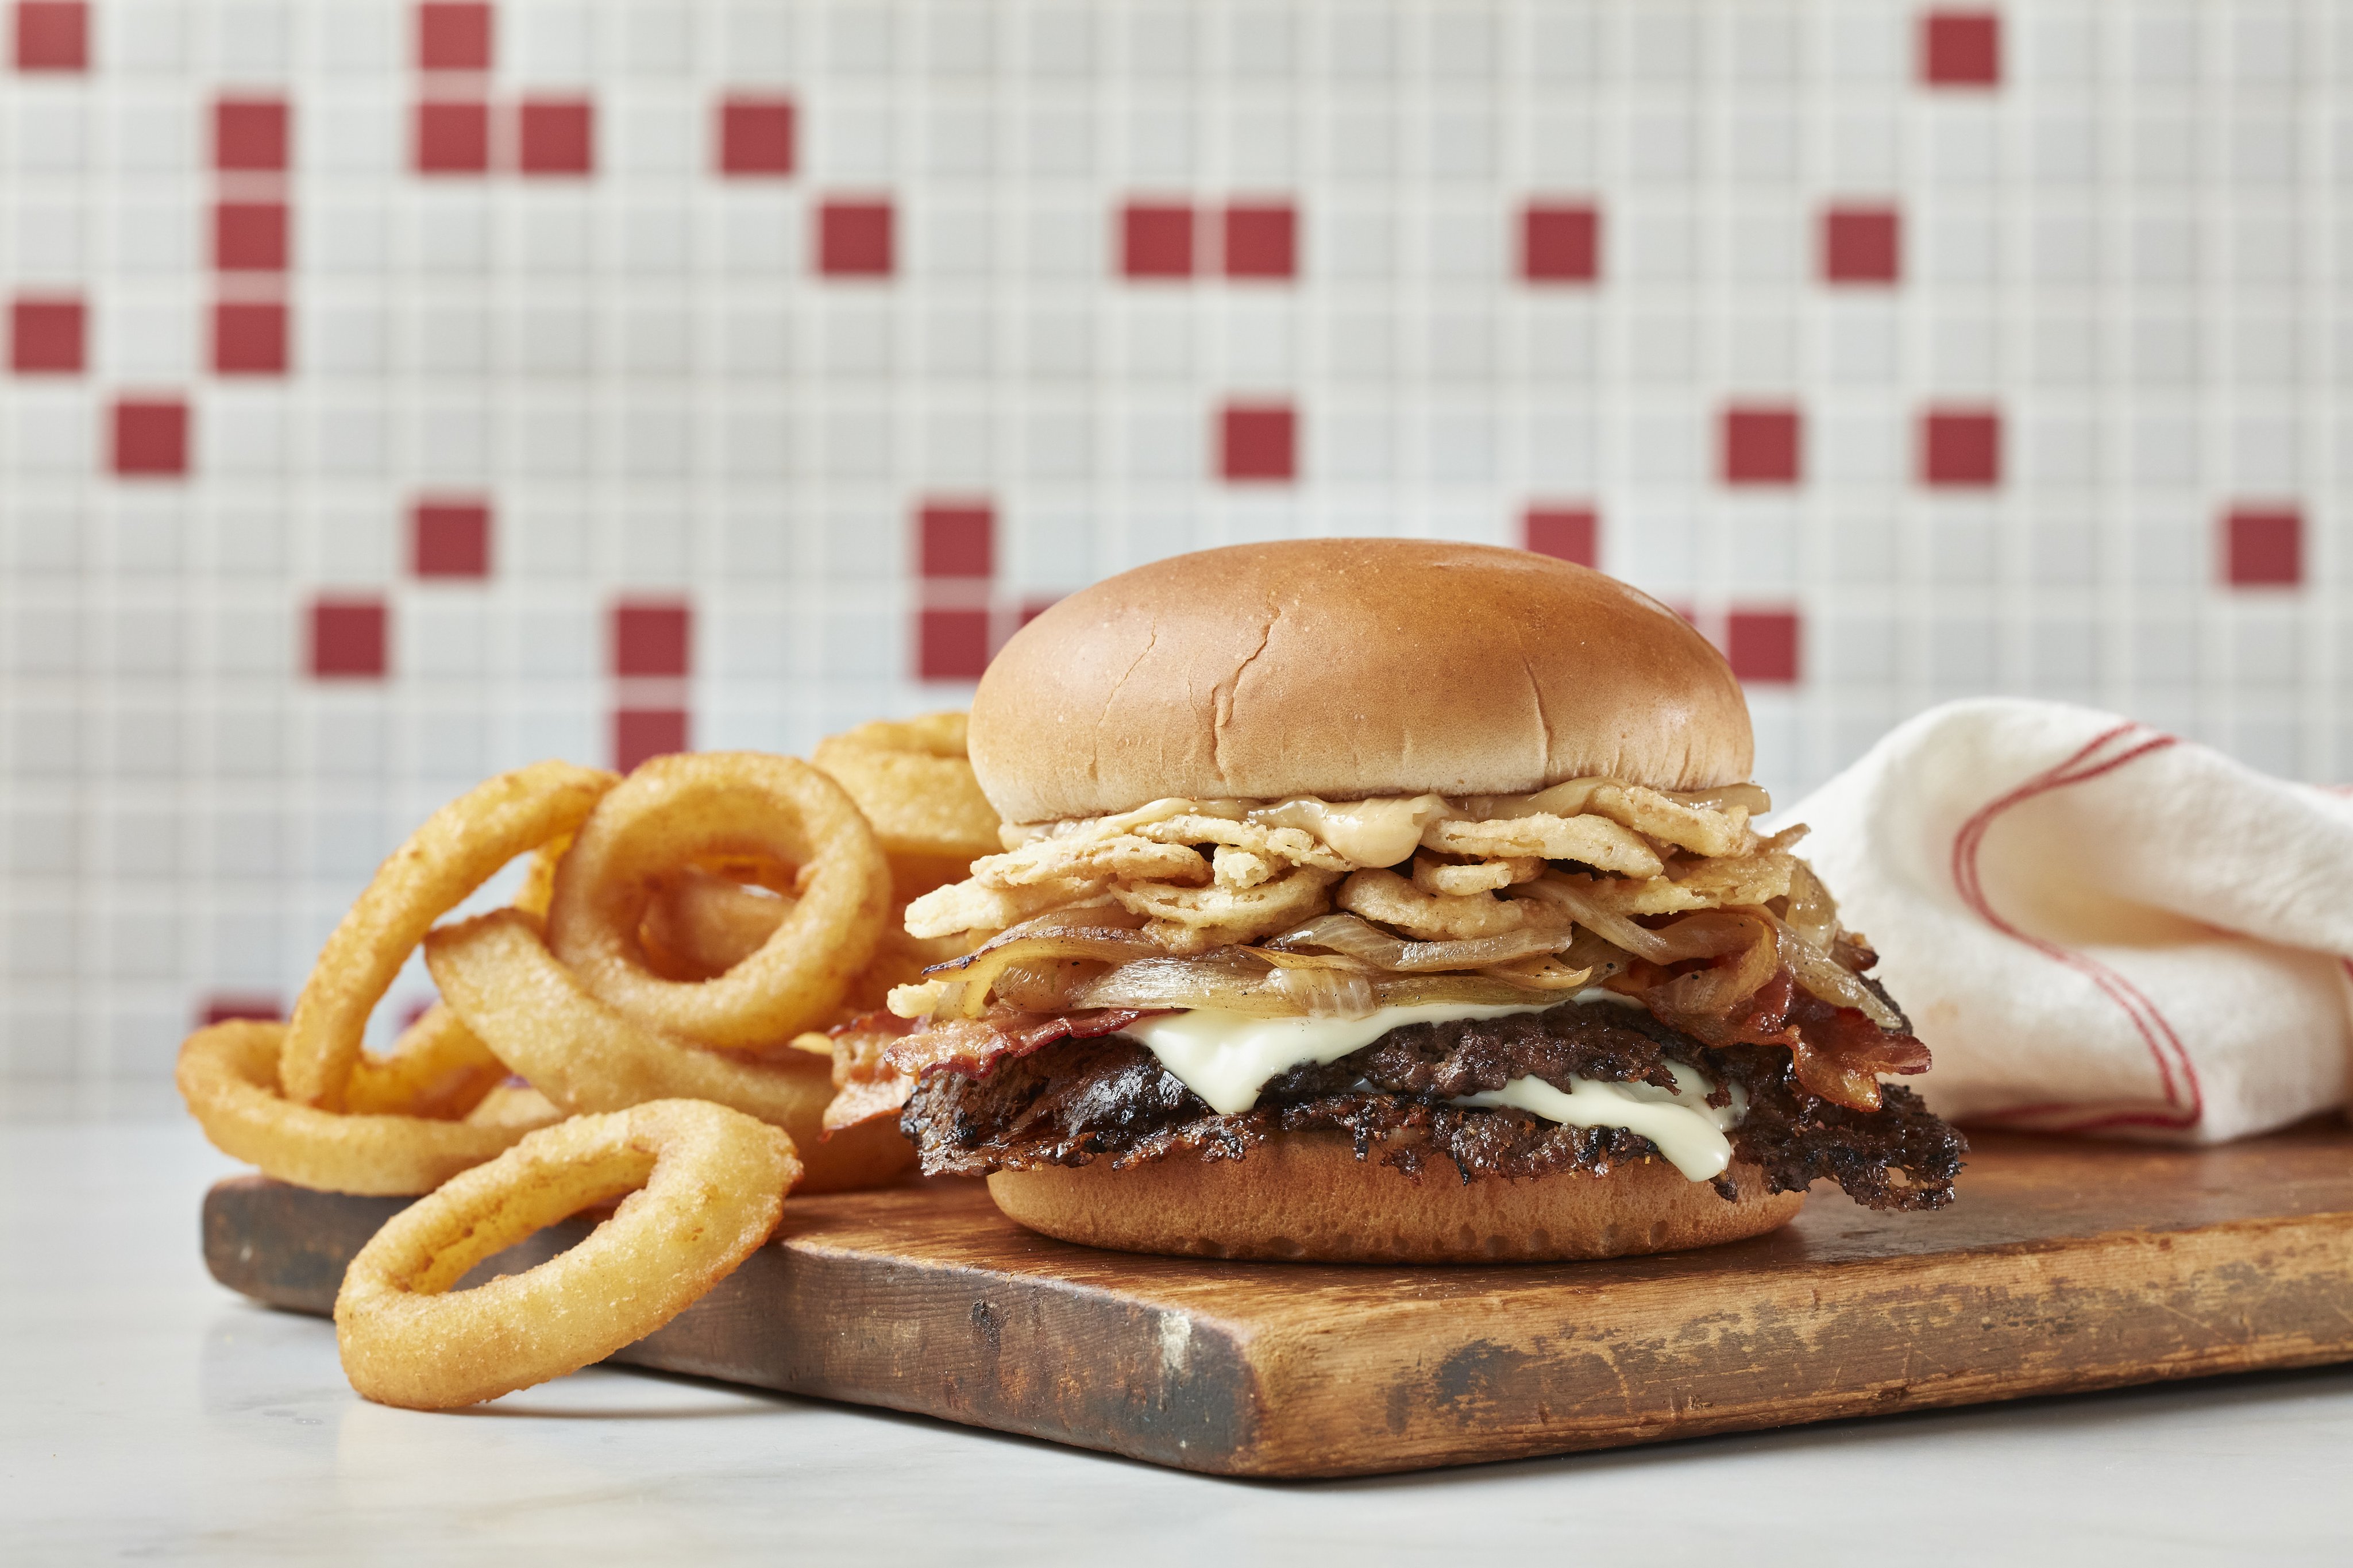 Two Locations of Freddy's Frozen Custard & Steakburgers Coming to  Burlington County - South Jersey Food Scene